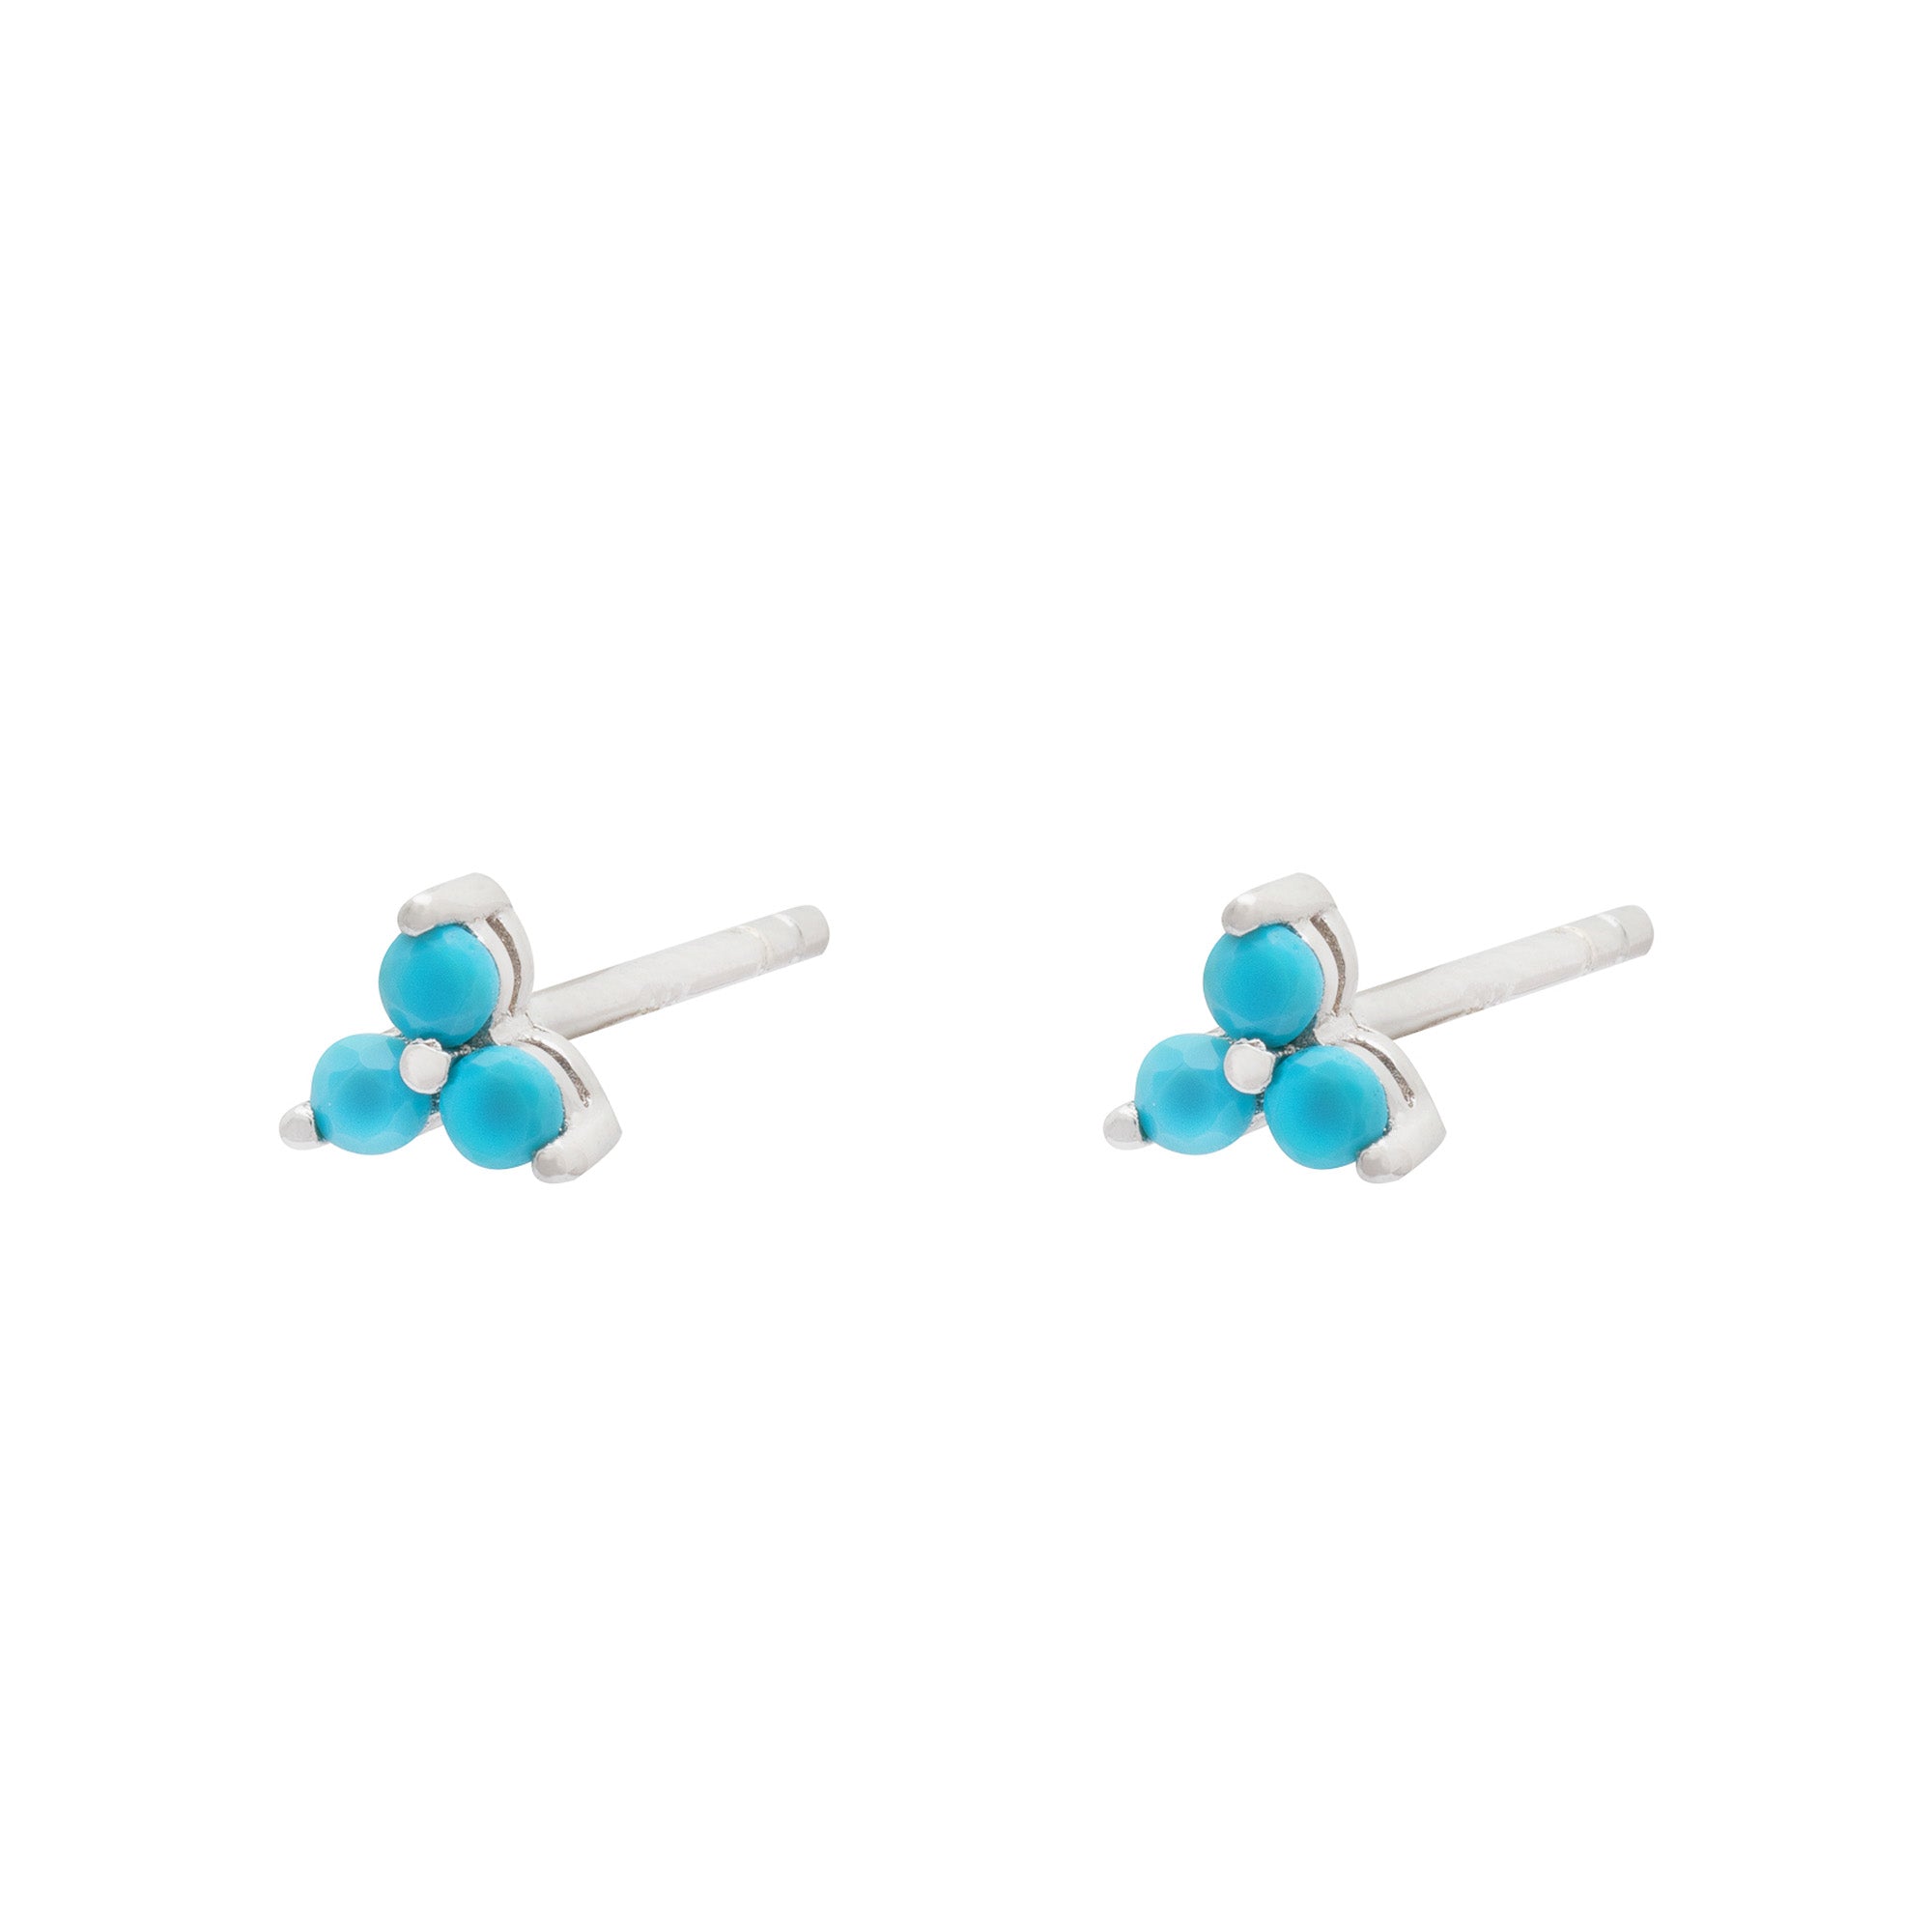 Duo Jewellery Earrings Duo three aqua stone stud earrungs